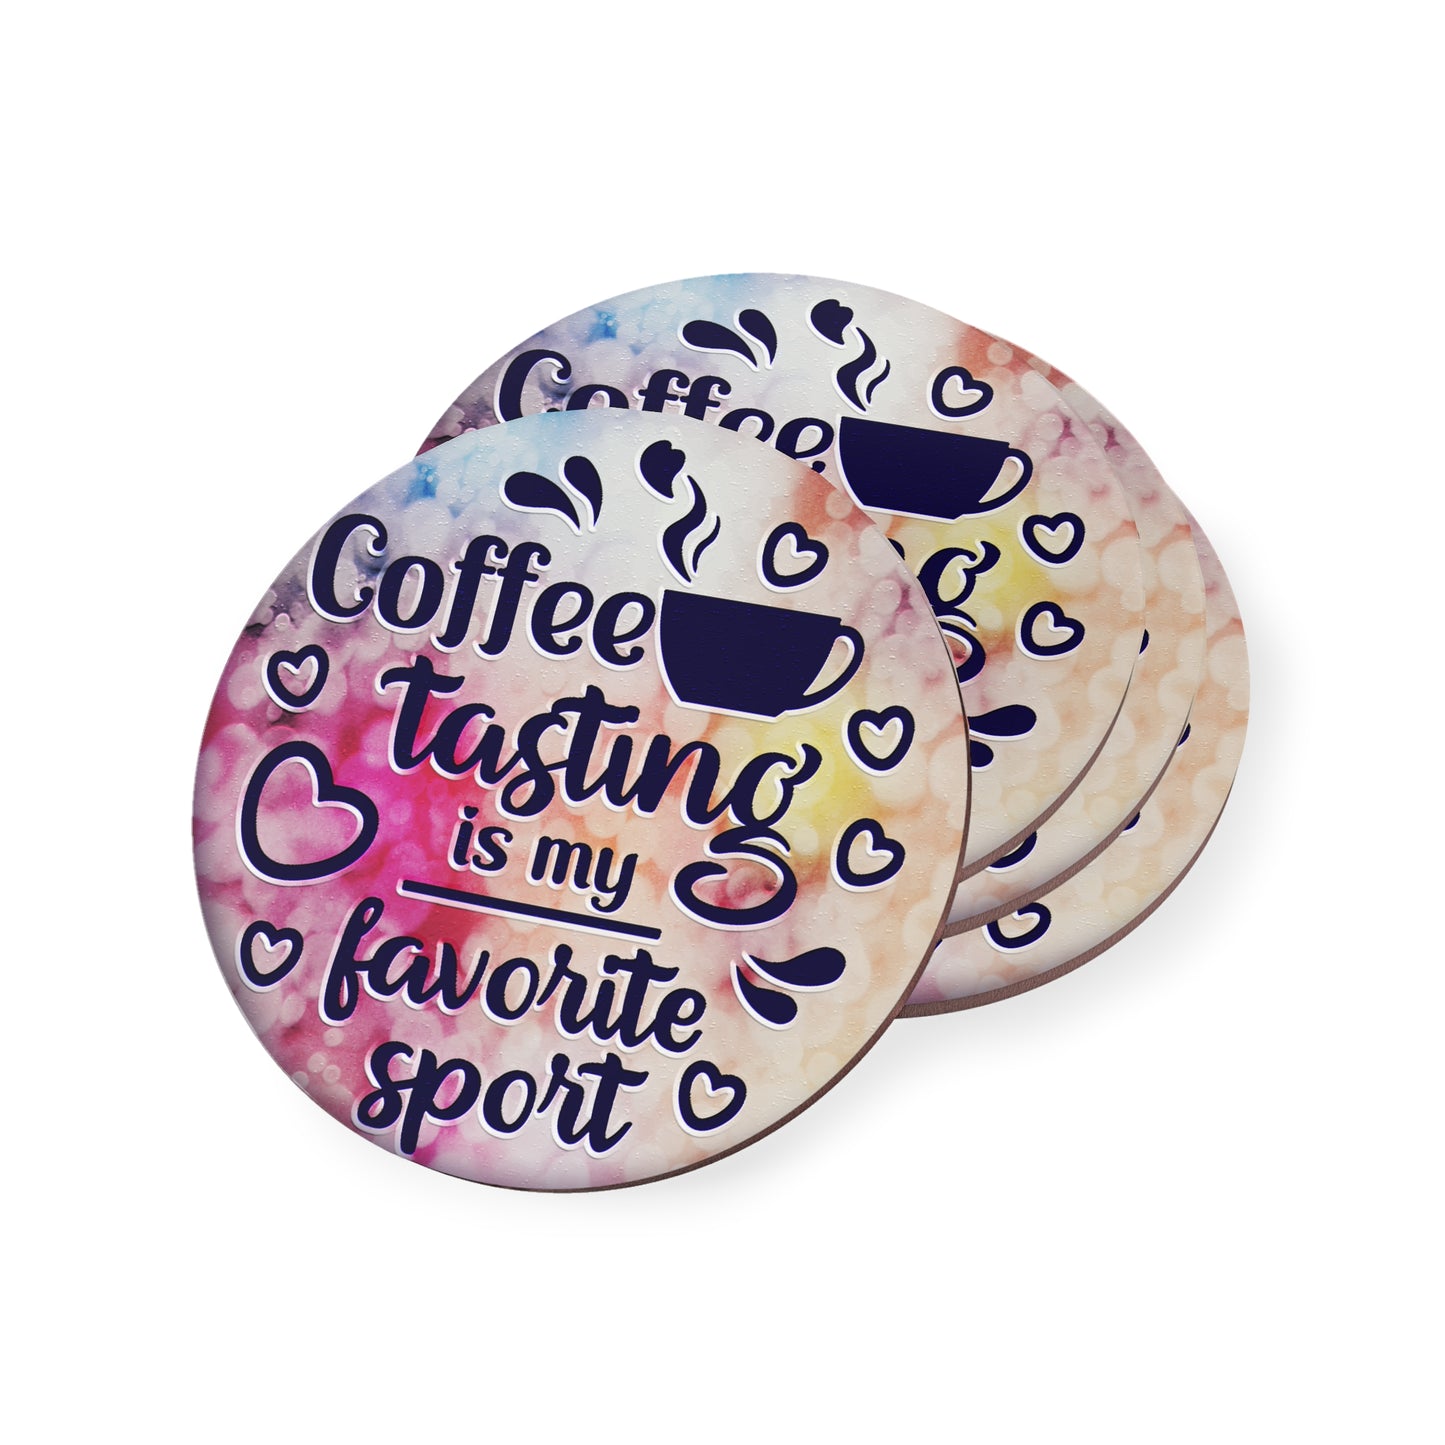 " Coffee Tasting Is My Favorite Sport " Round Coasters